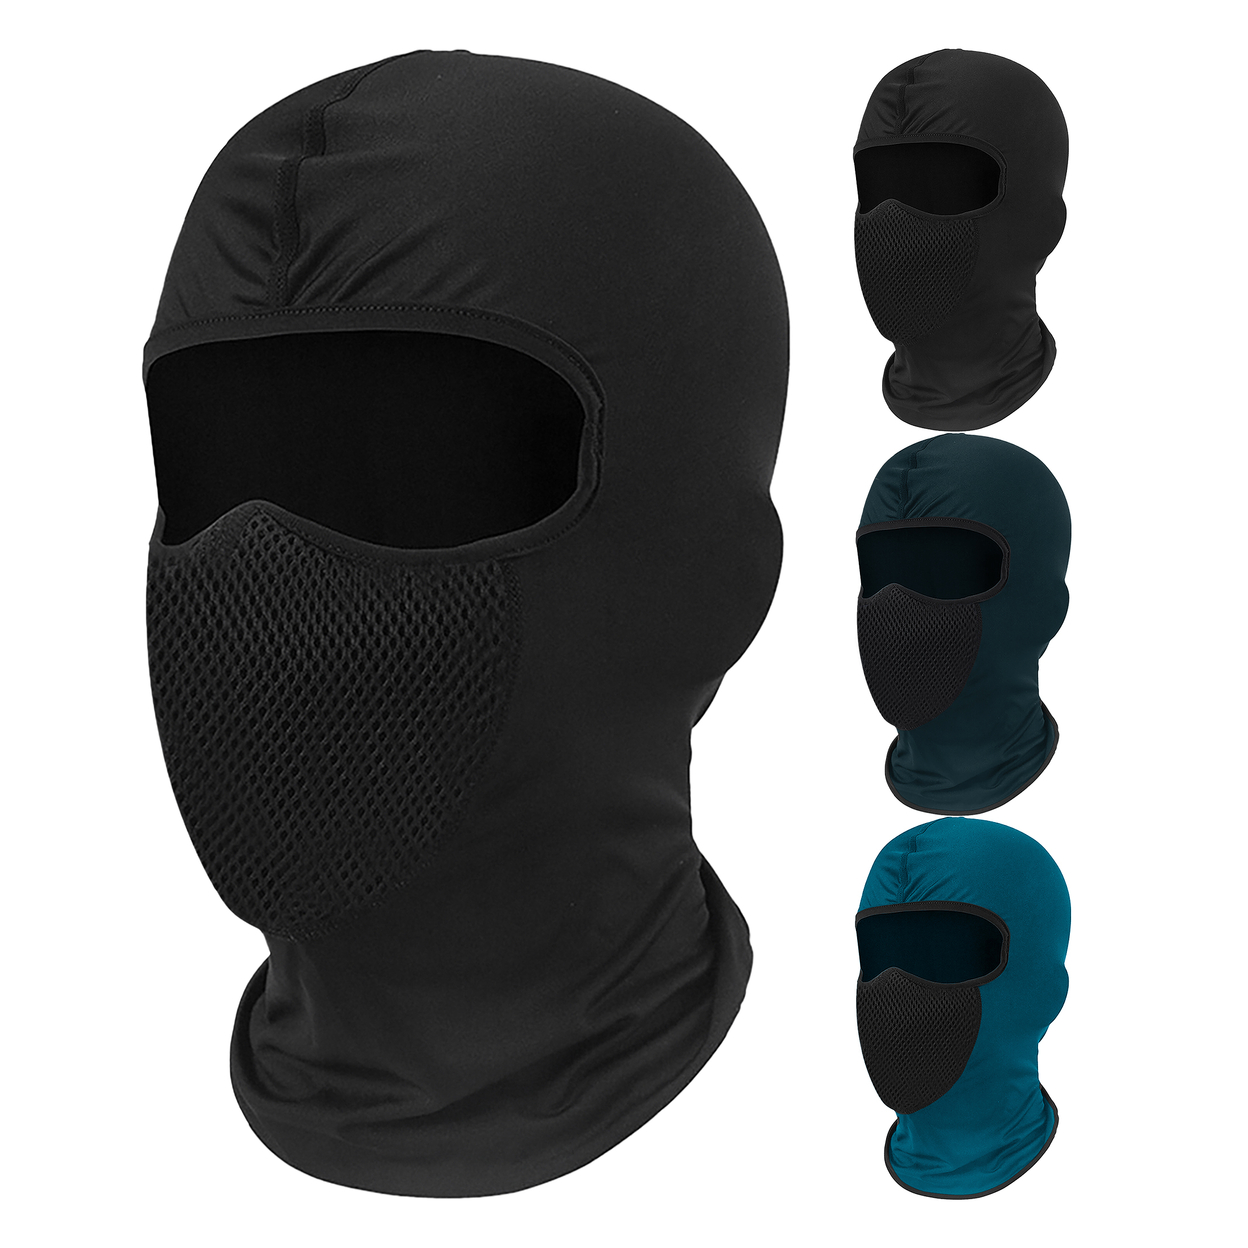 2-Pack: Men's Warm Winter Windproof Breathable Cozy Thermal Balaclava Winter Ski Full Face Mask - Black & Black